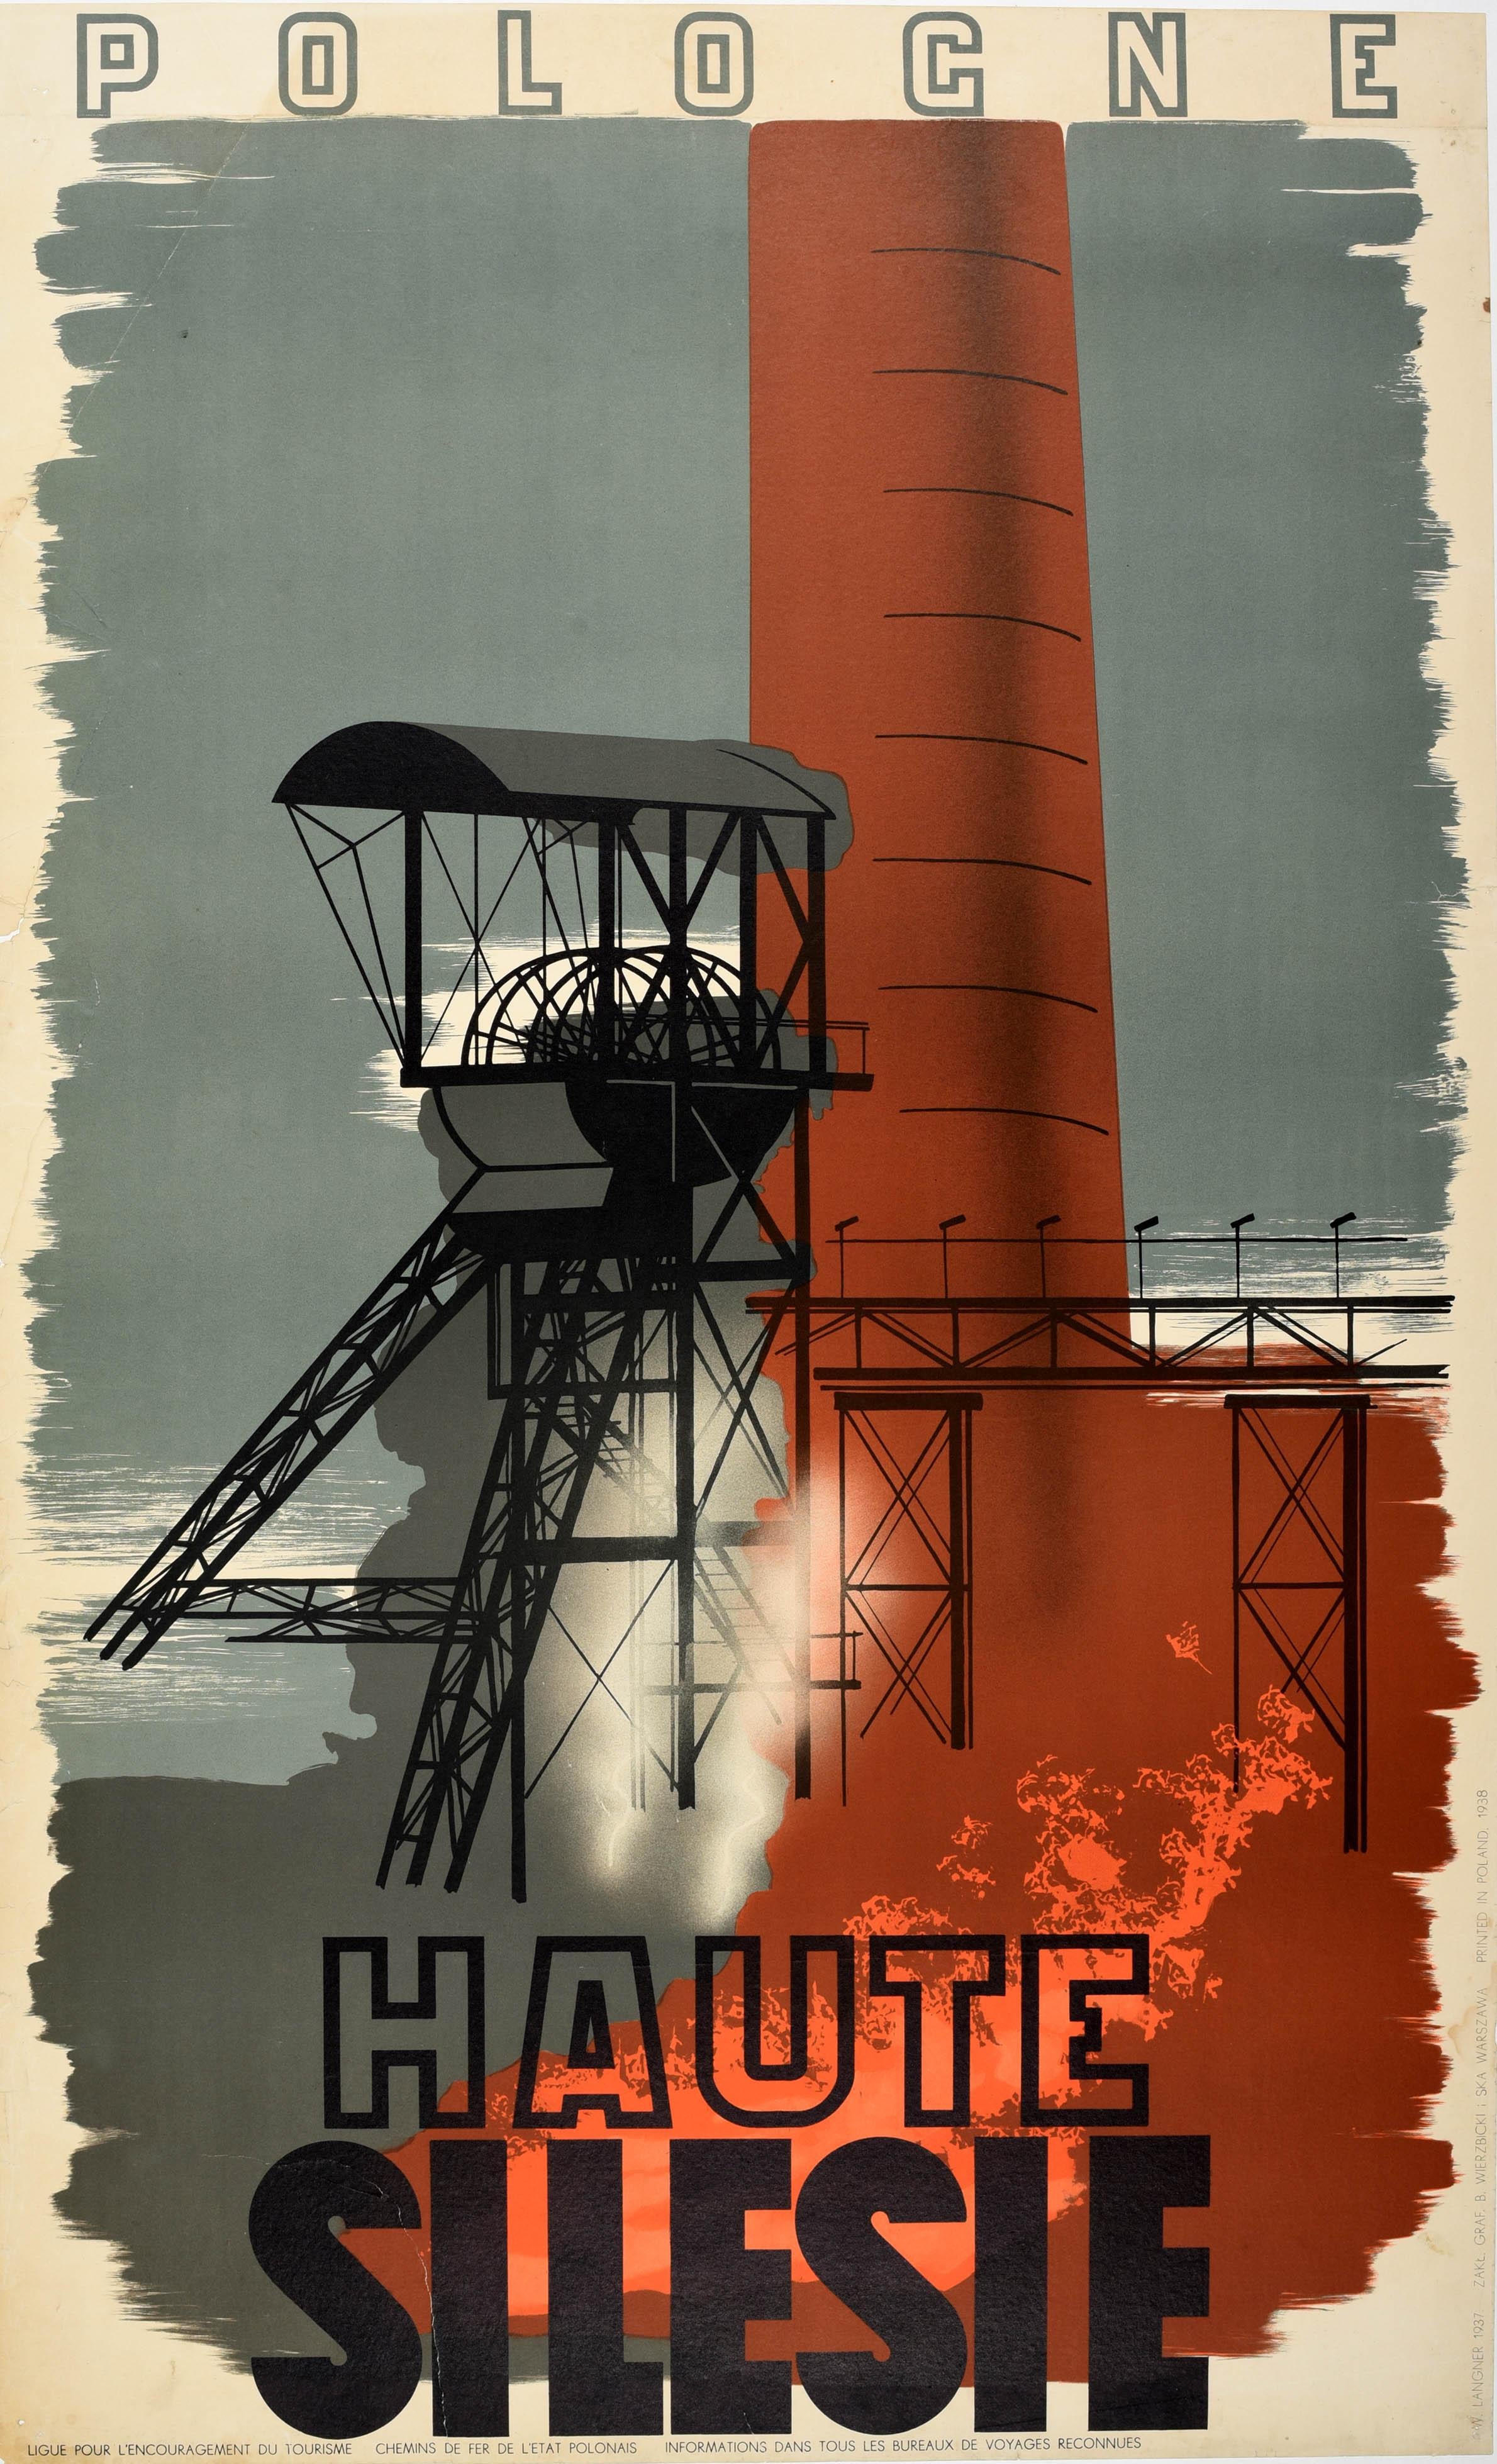 W Langer Print - Original Vintage Travel Poster Pologne Poland Upper Silesia Industrial Design